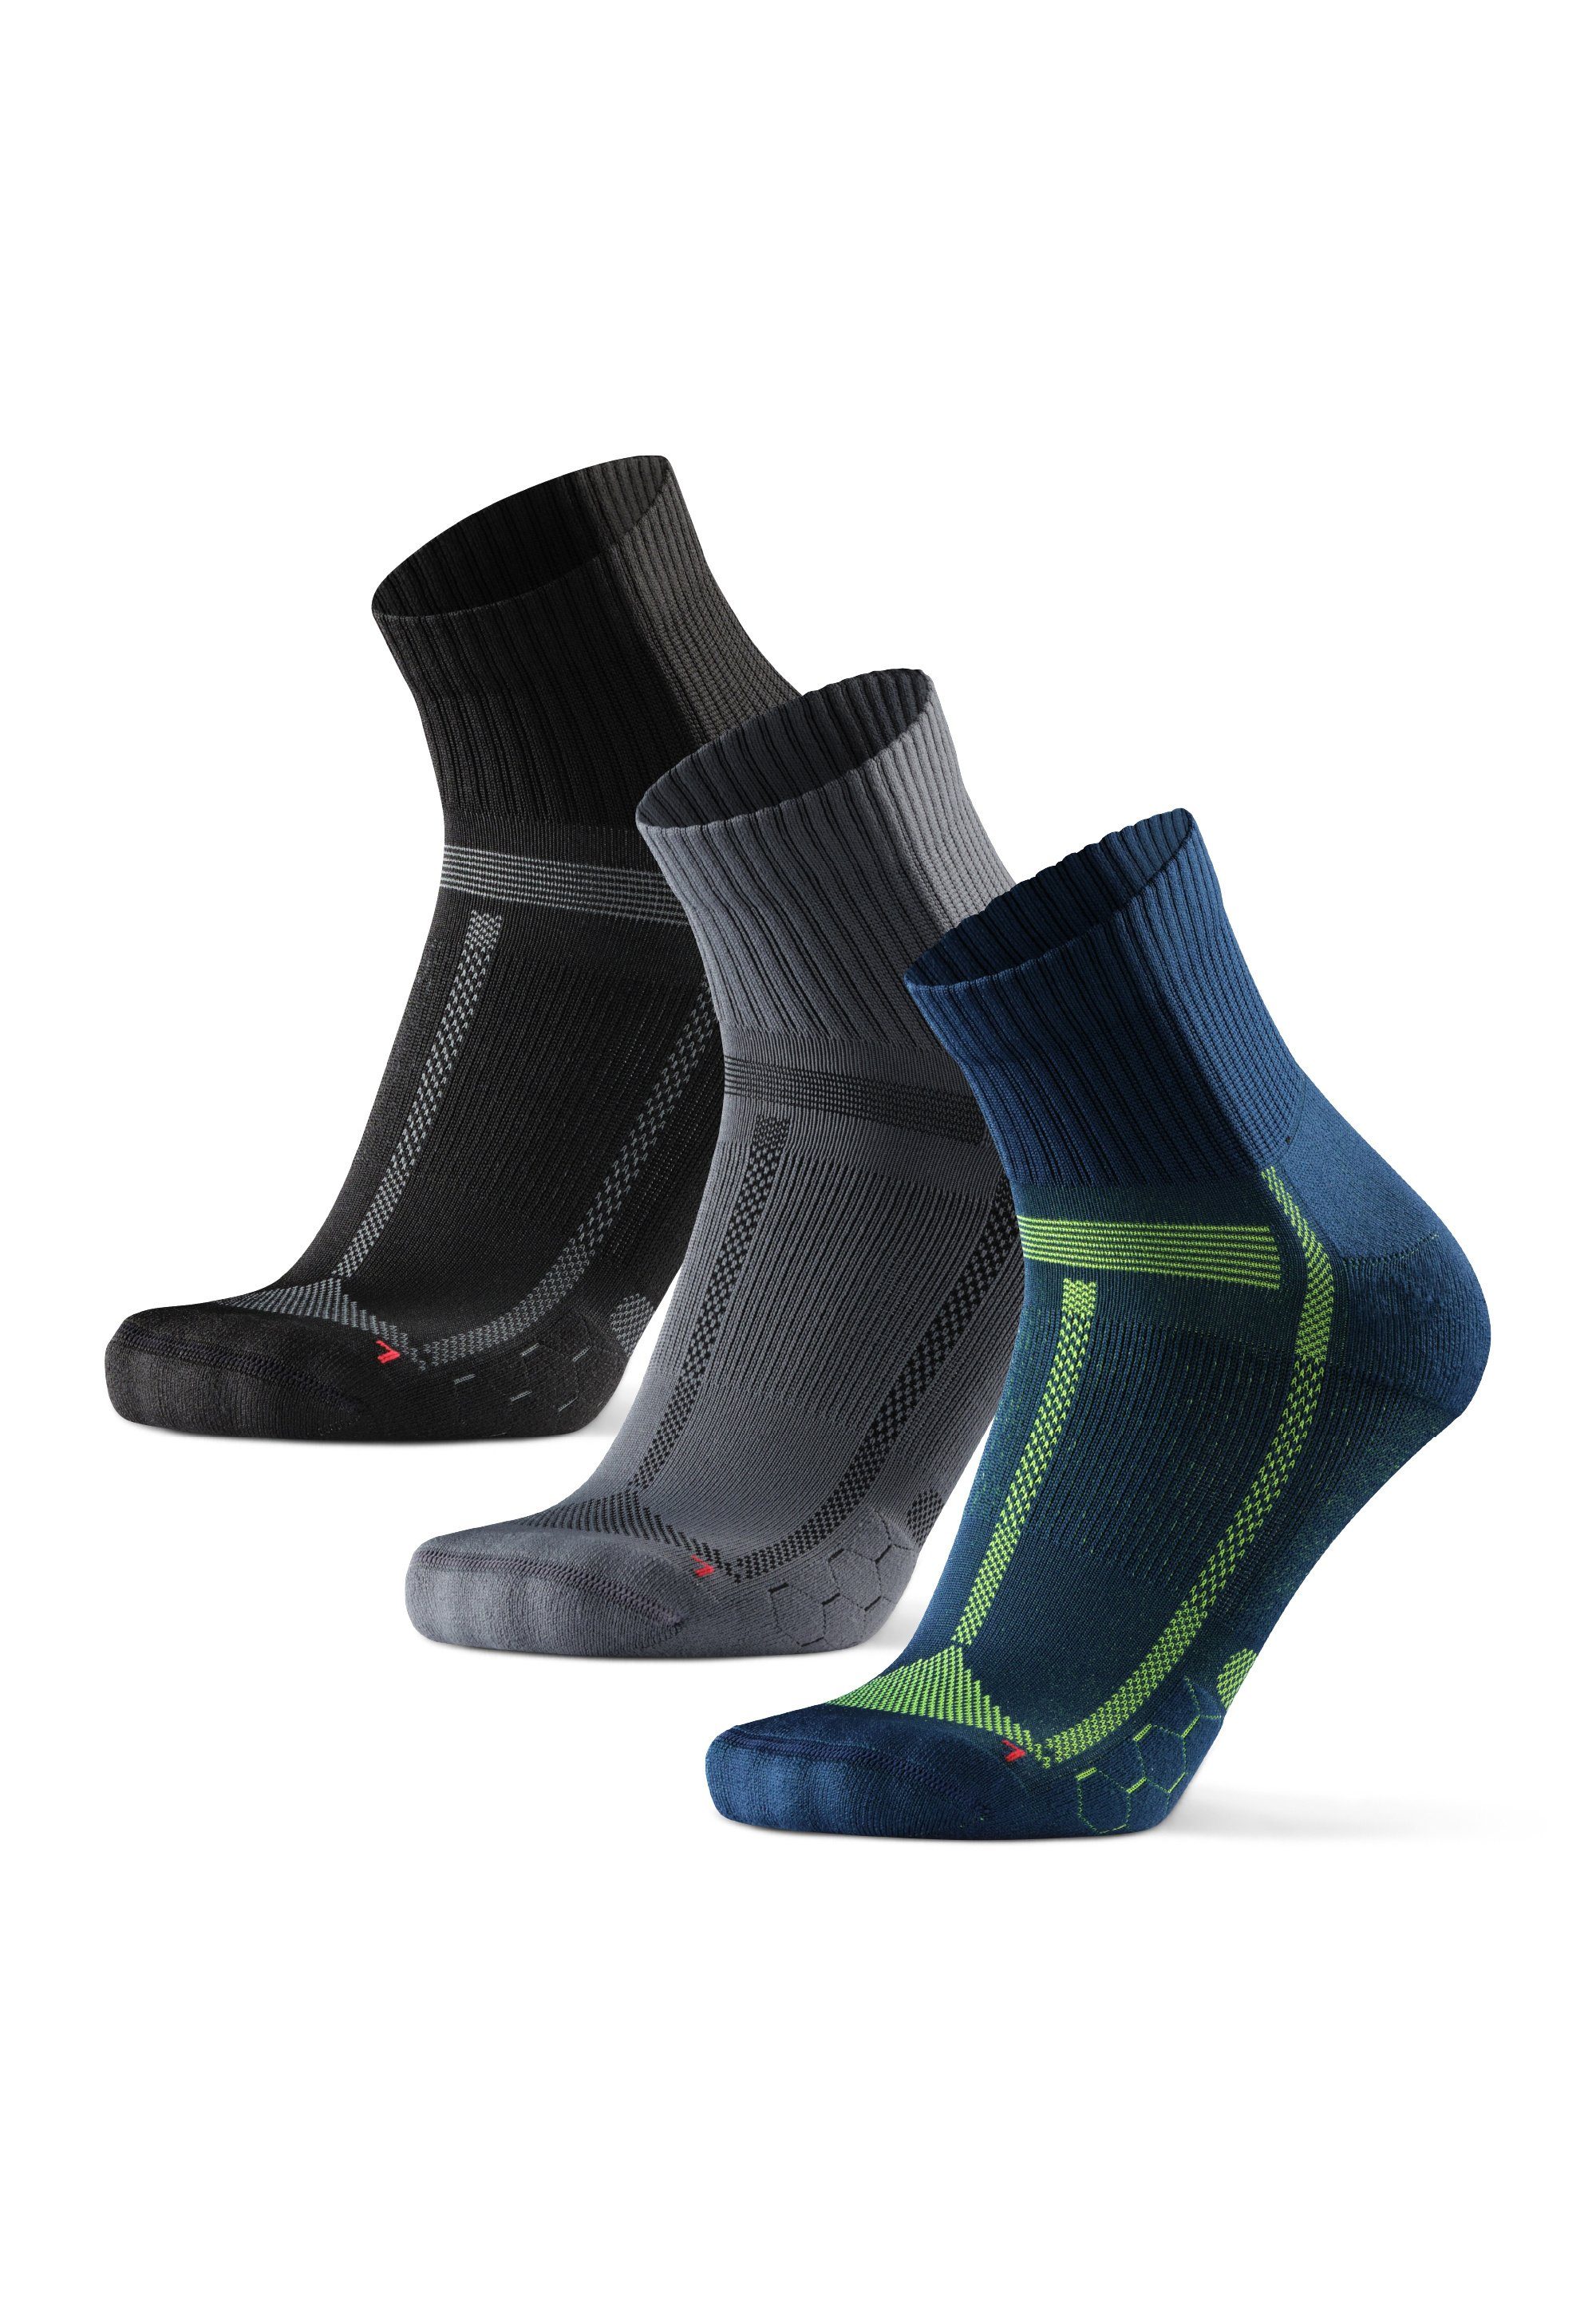 DANISH ENDURANCE Laufsocken Long Distance Running Socks (Packung, 3-Paar) Anti-Blasen, Technisch Multicolor